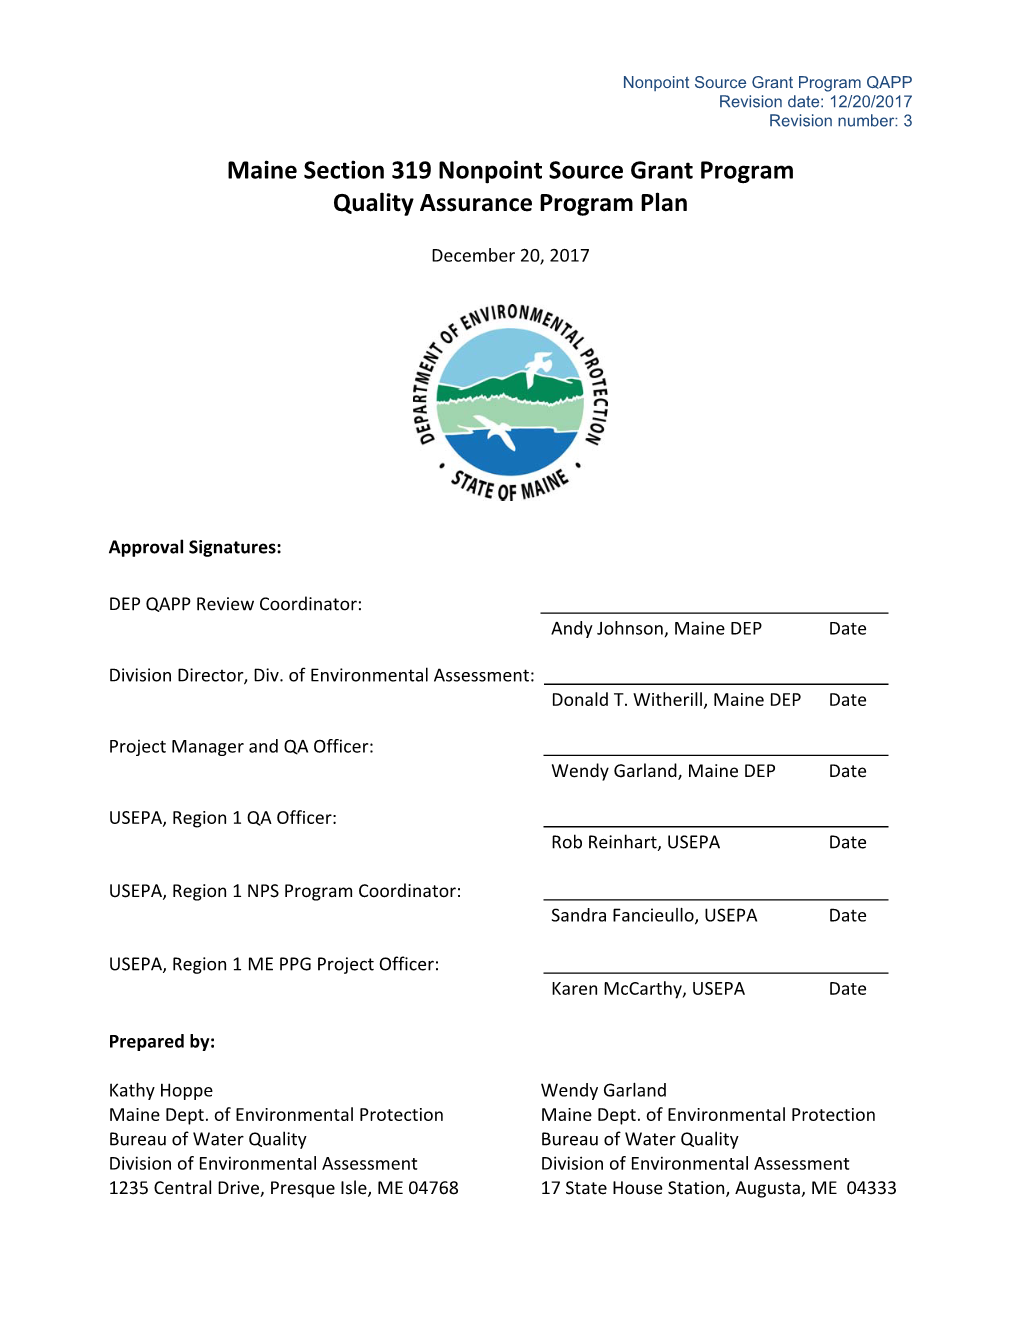 319 NPS Management Program Quality Assurance Program Plan, Maine Department of Environmental Protection (December 2017)